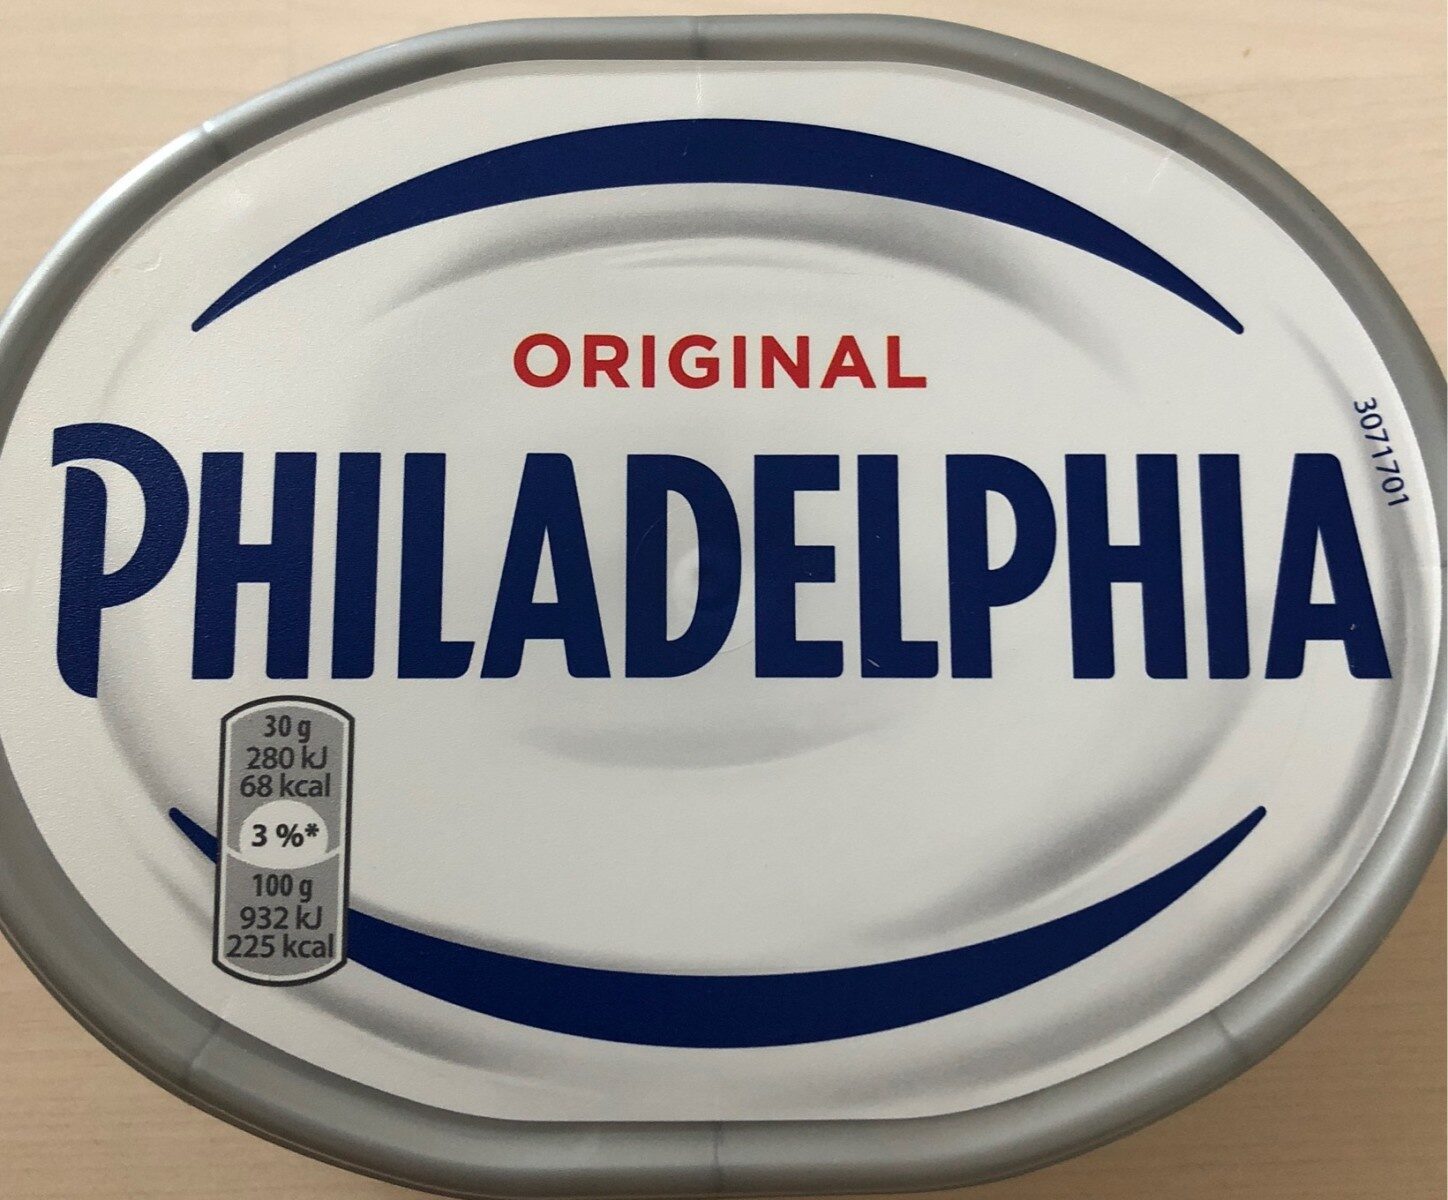 Queso Crema Philadelphia Original - Product - en